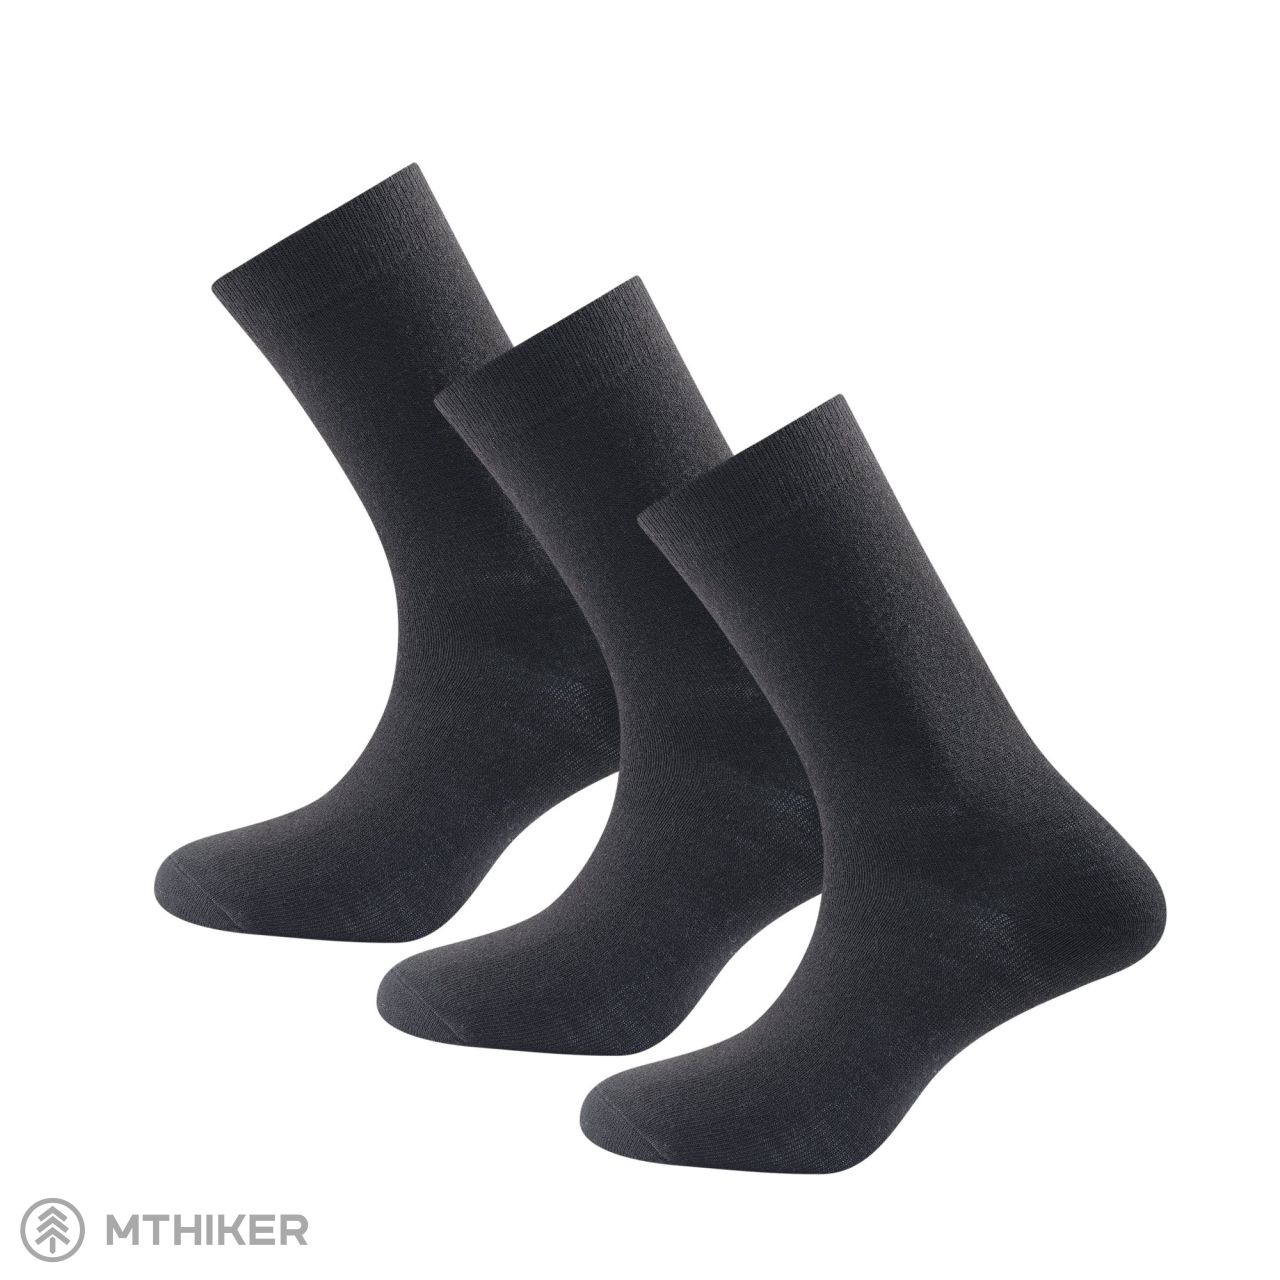 Devold DAILY MERINO MEDIUM socks, 3 pack, black